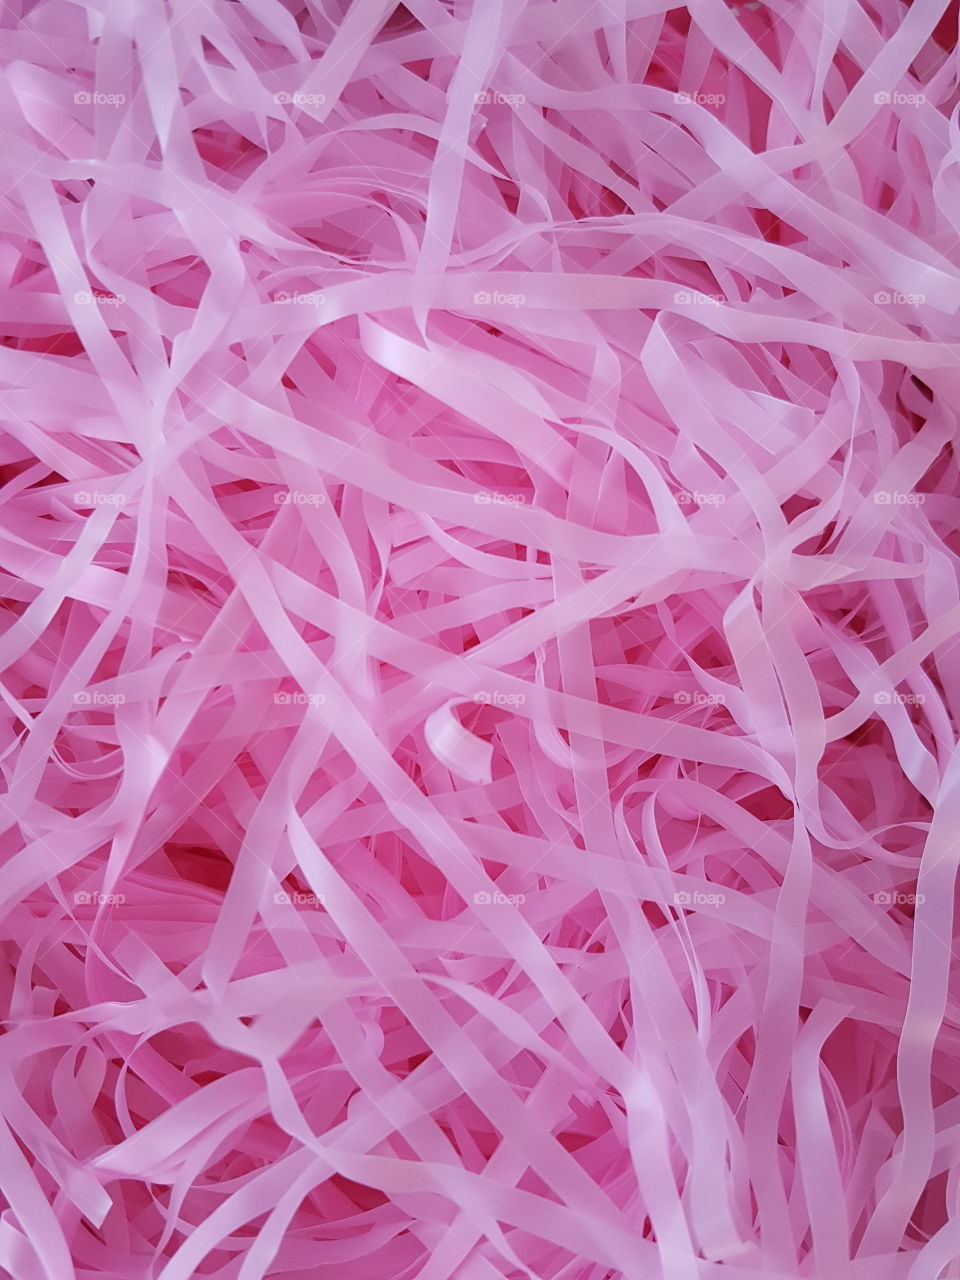 shredded pink paper